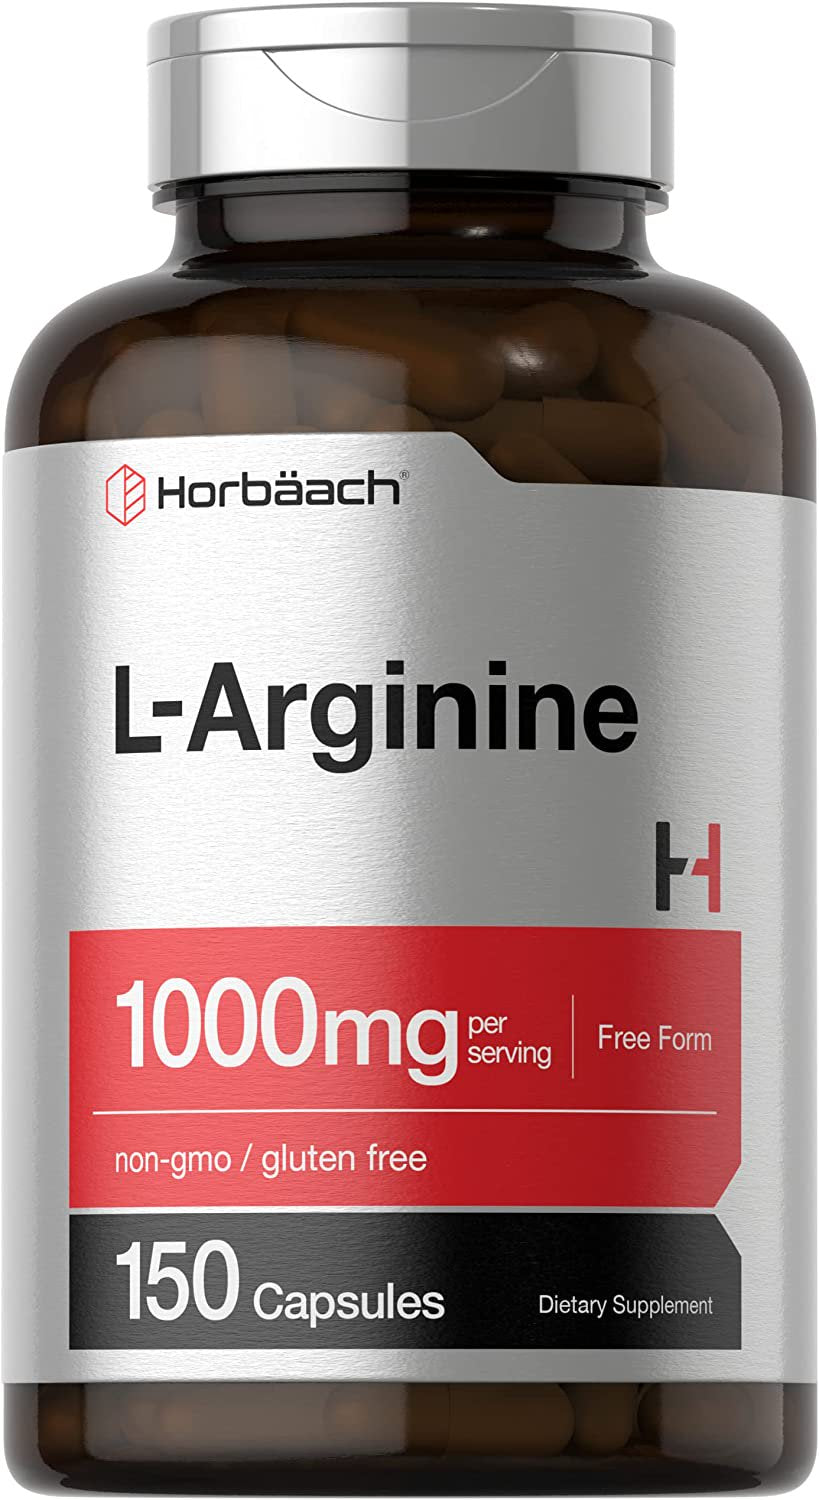 L Arginine 1000Mg | 150 Capsules | Free Form | by Horbaach